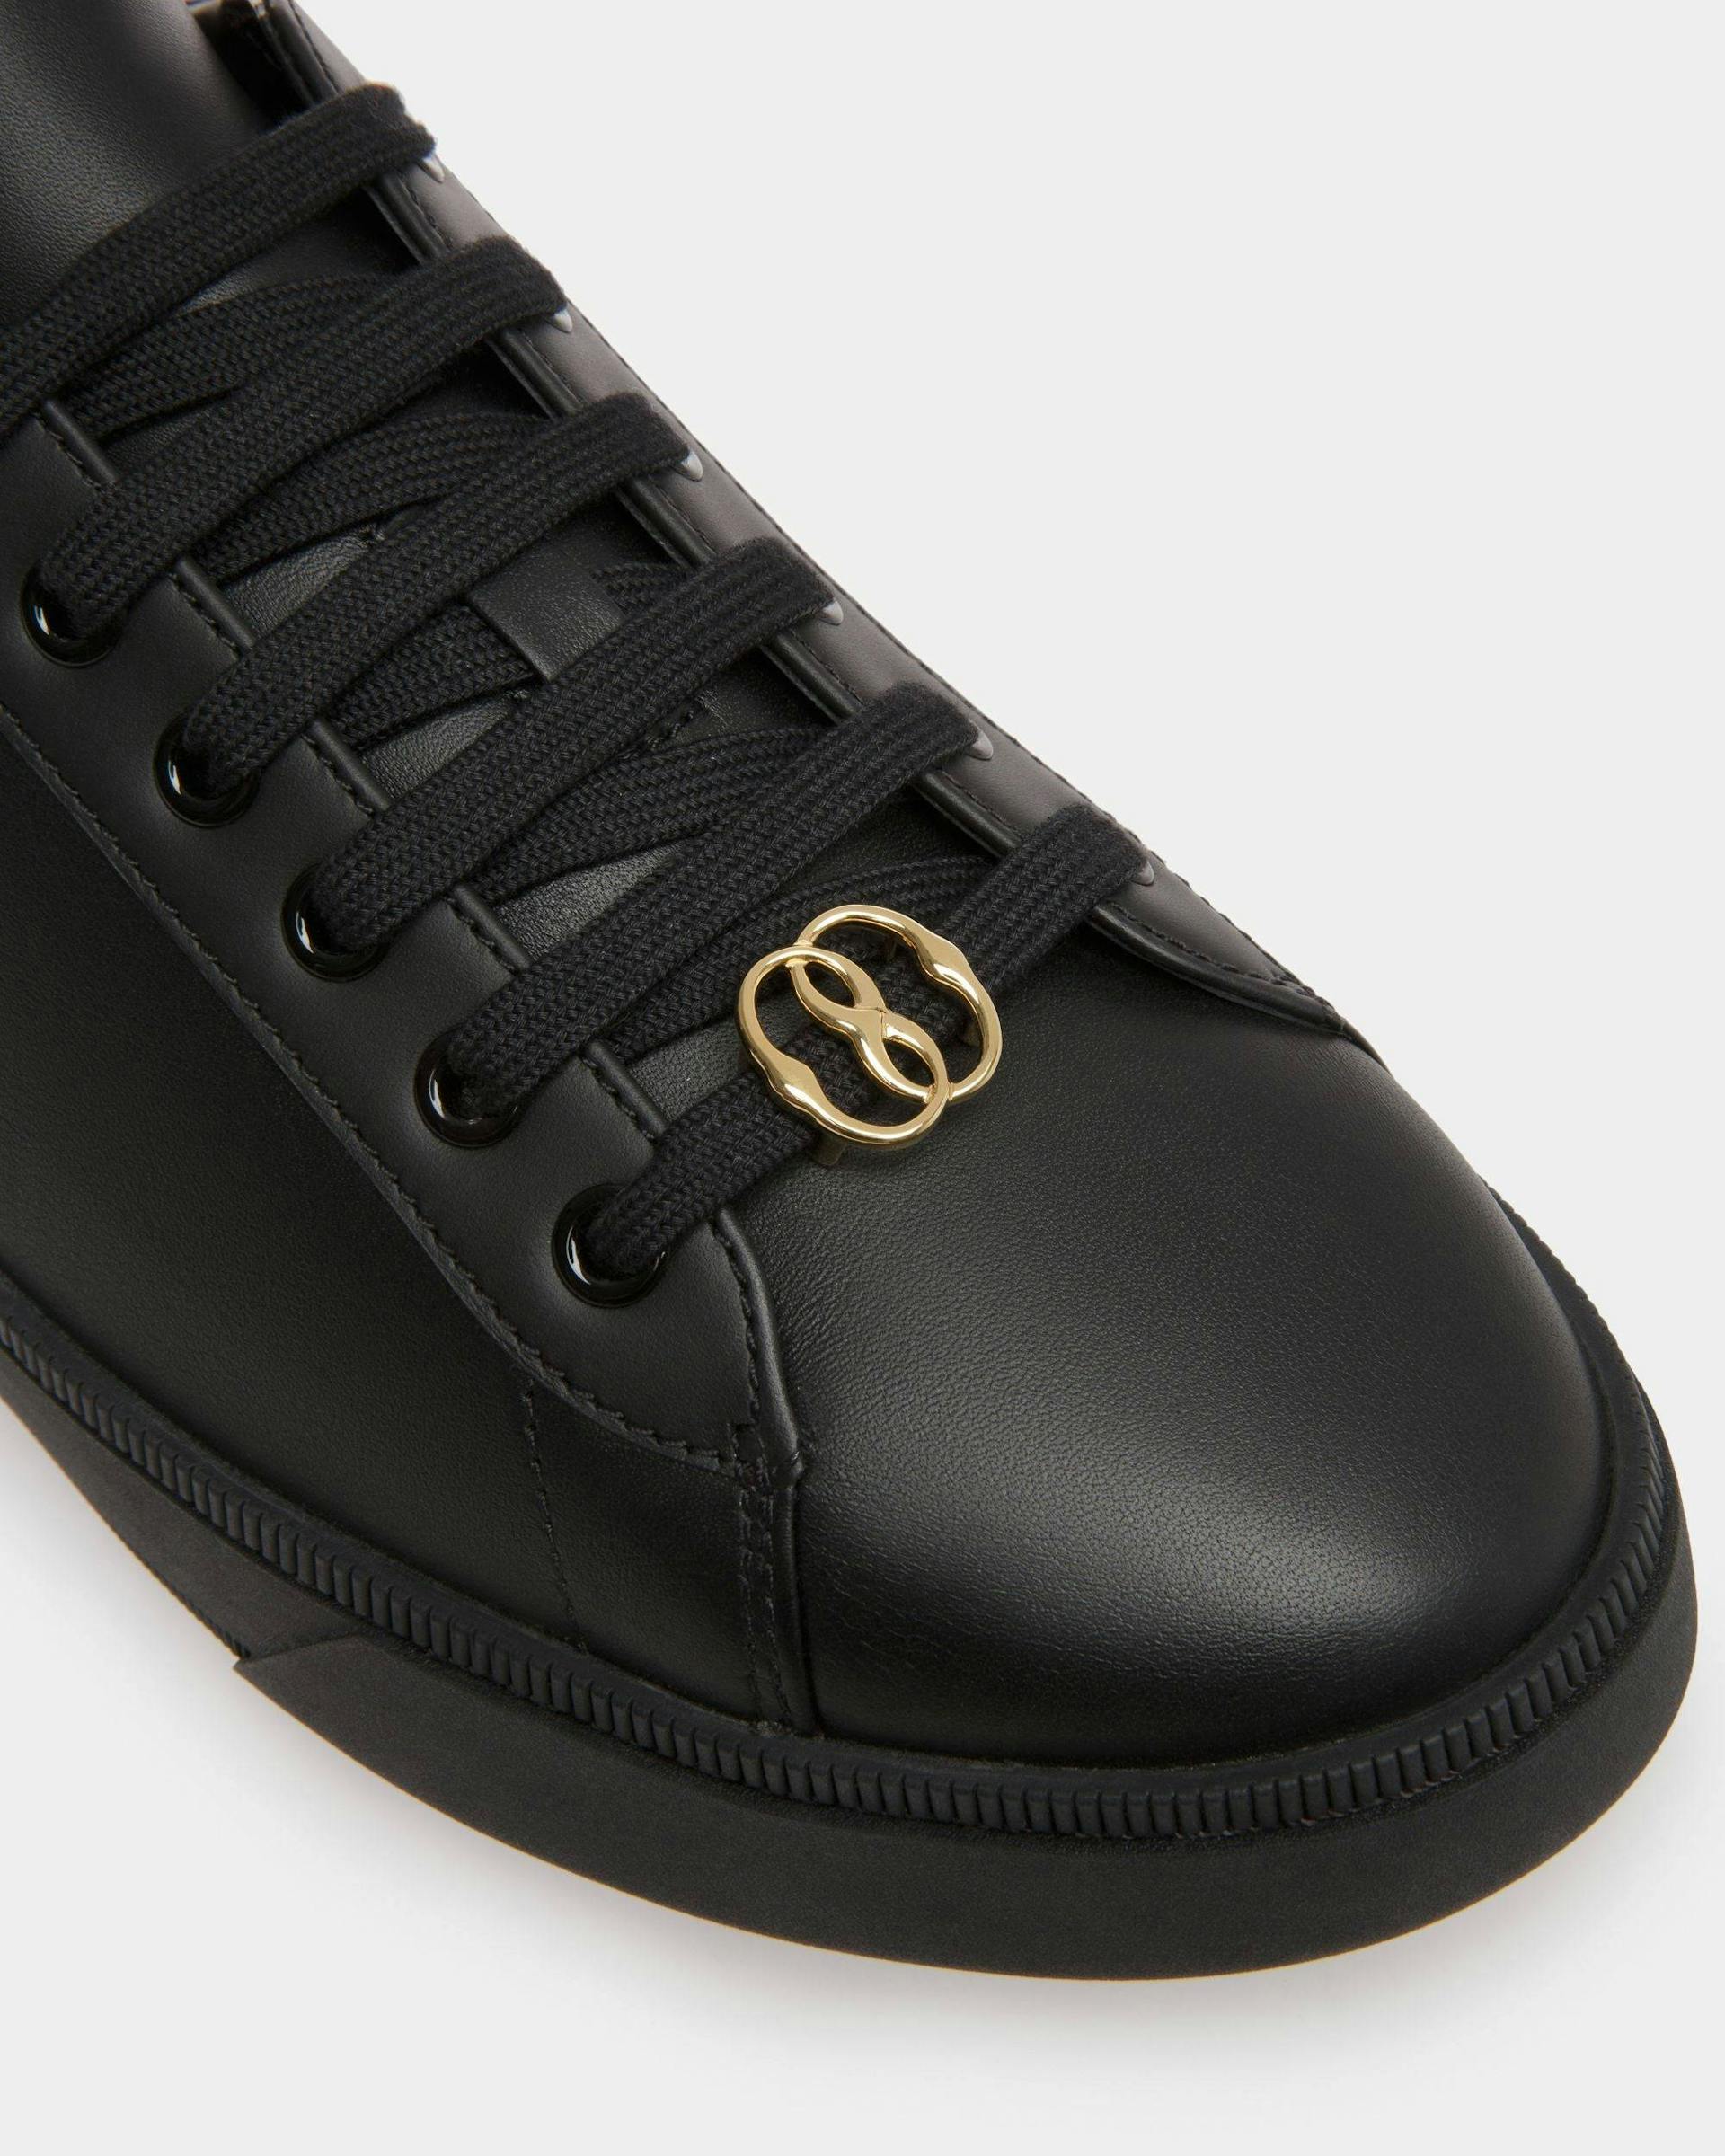 Raise Sneakers In Black Leather - Men's - Bally - 07